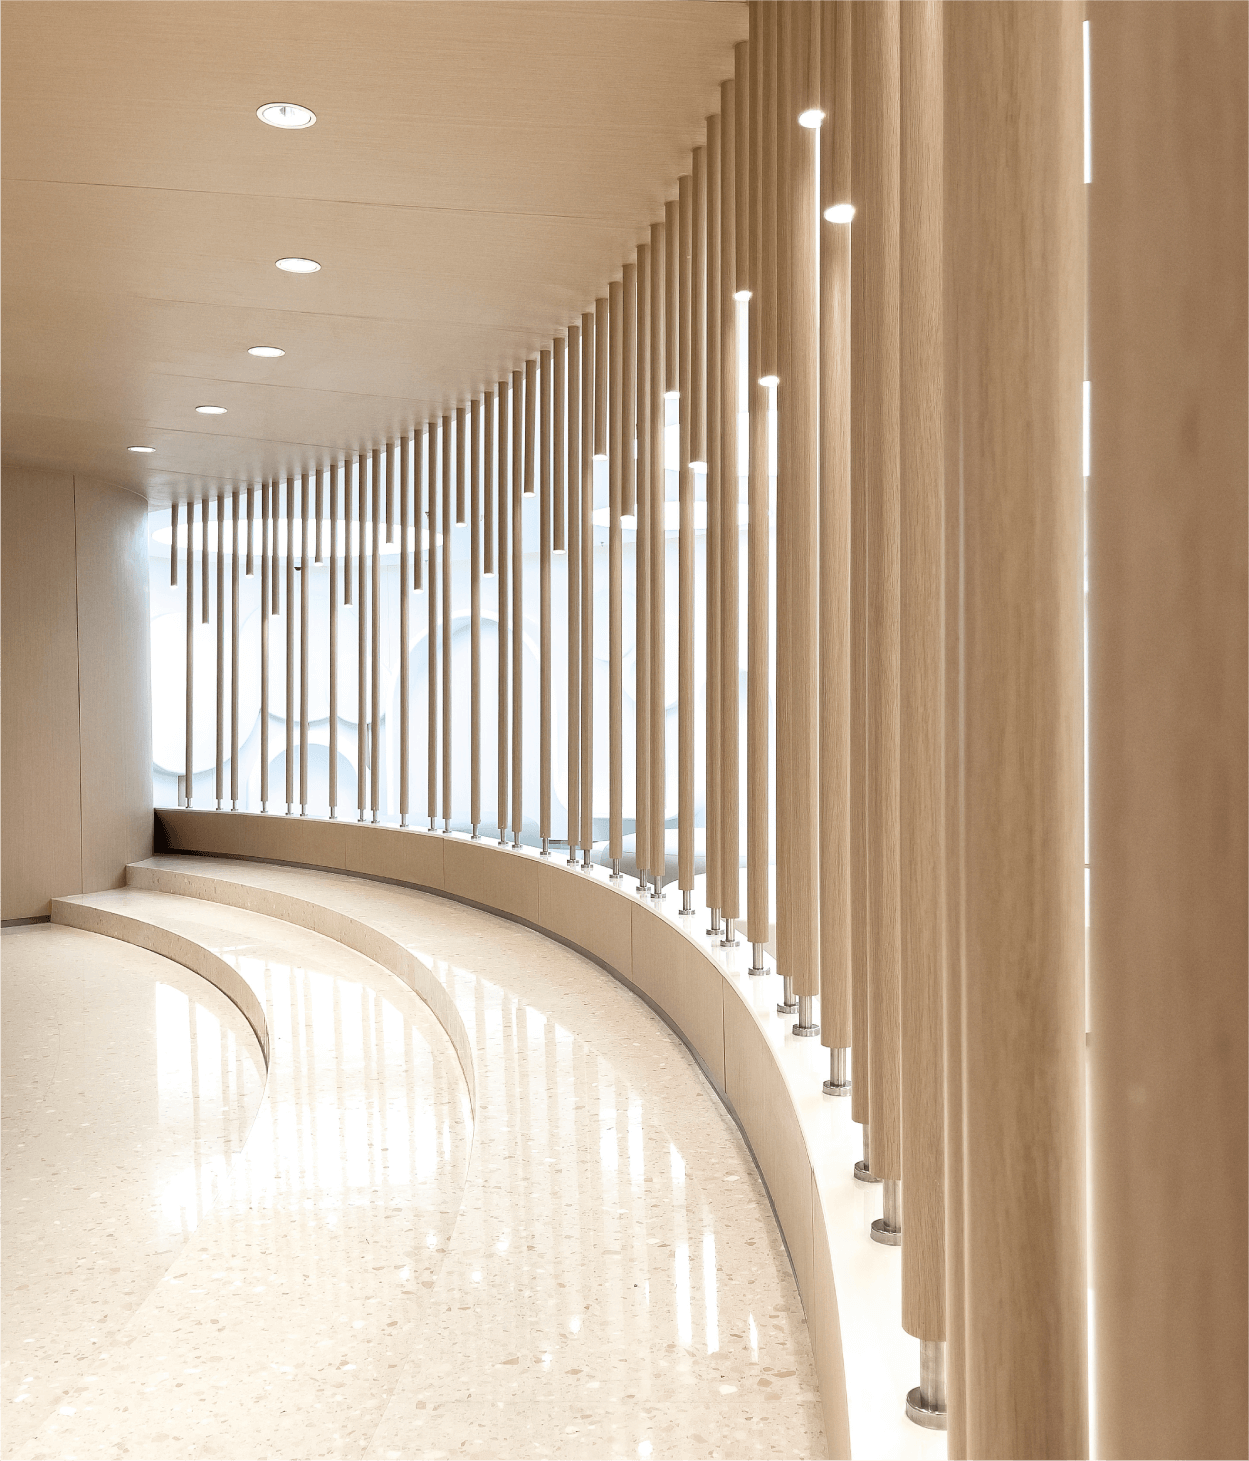 View of modern architecture hallway